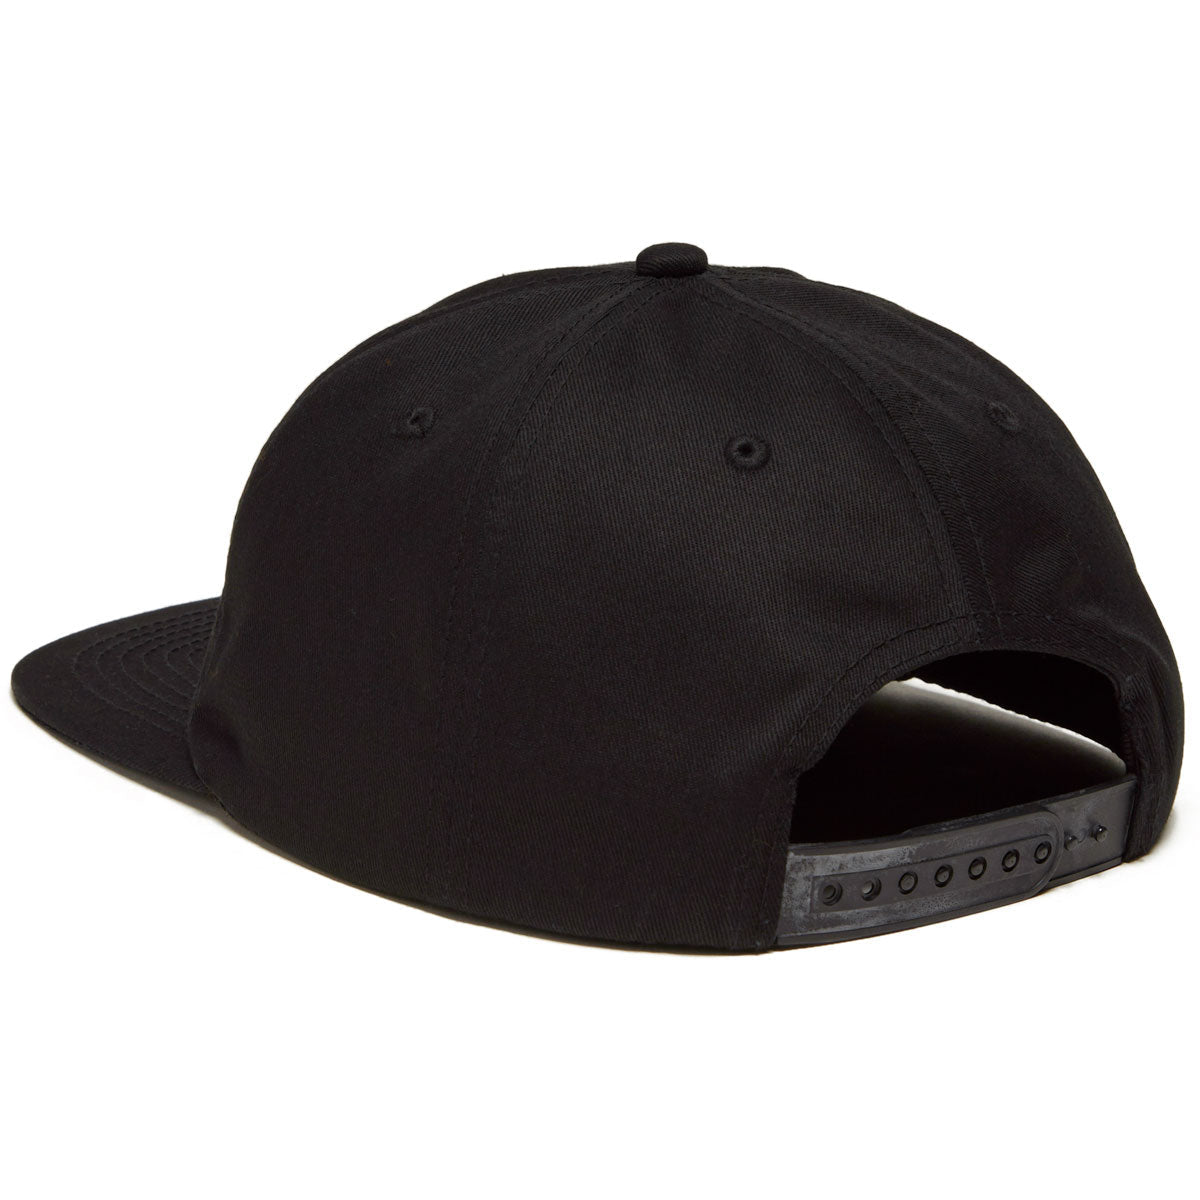 CCS 6 Panel Snapback Hat - Black image 2